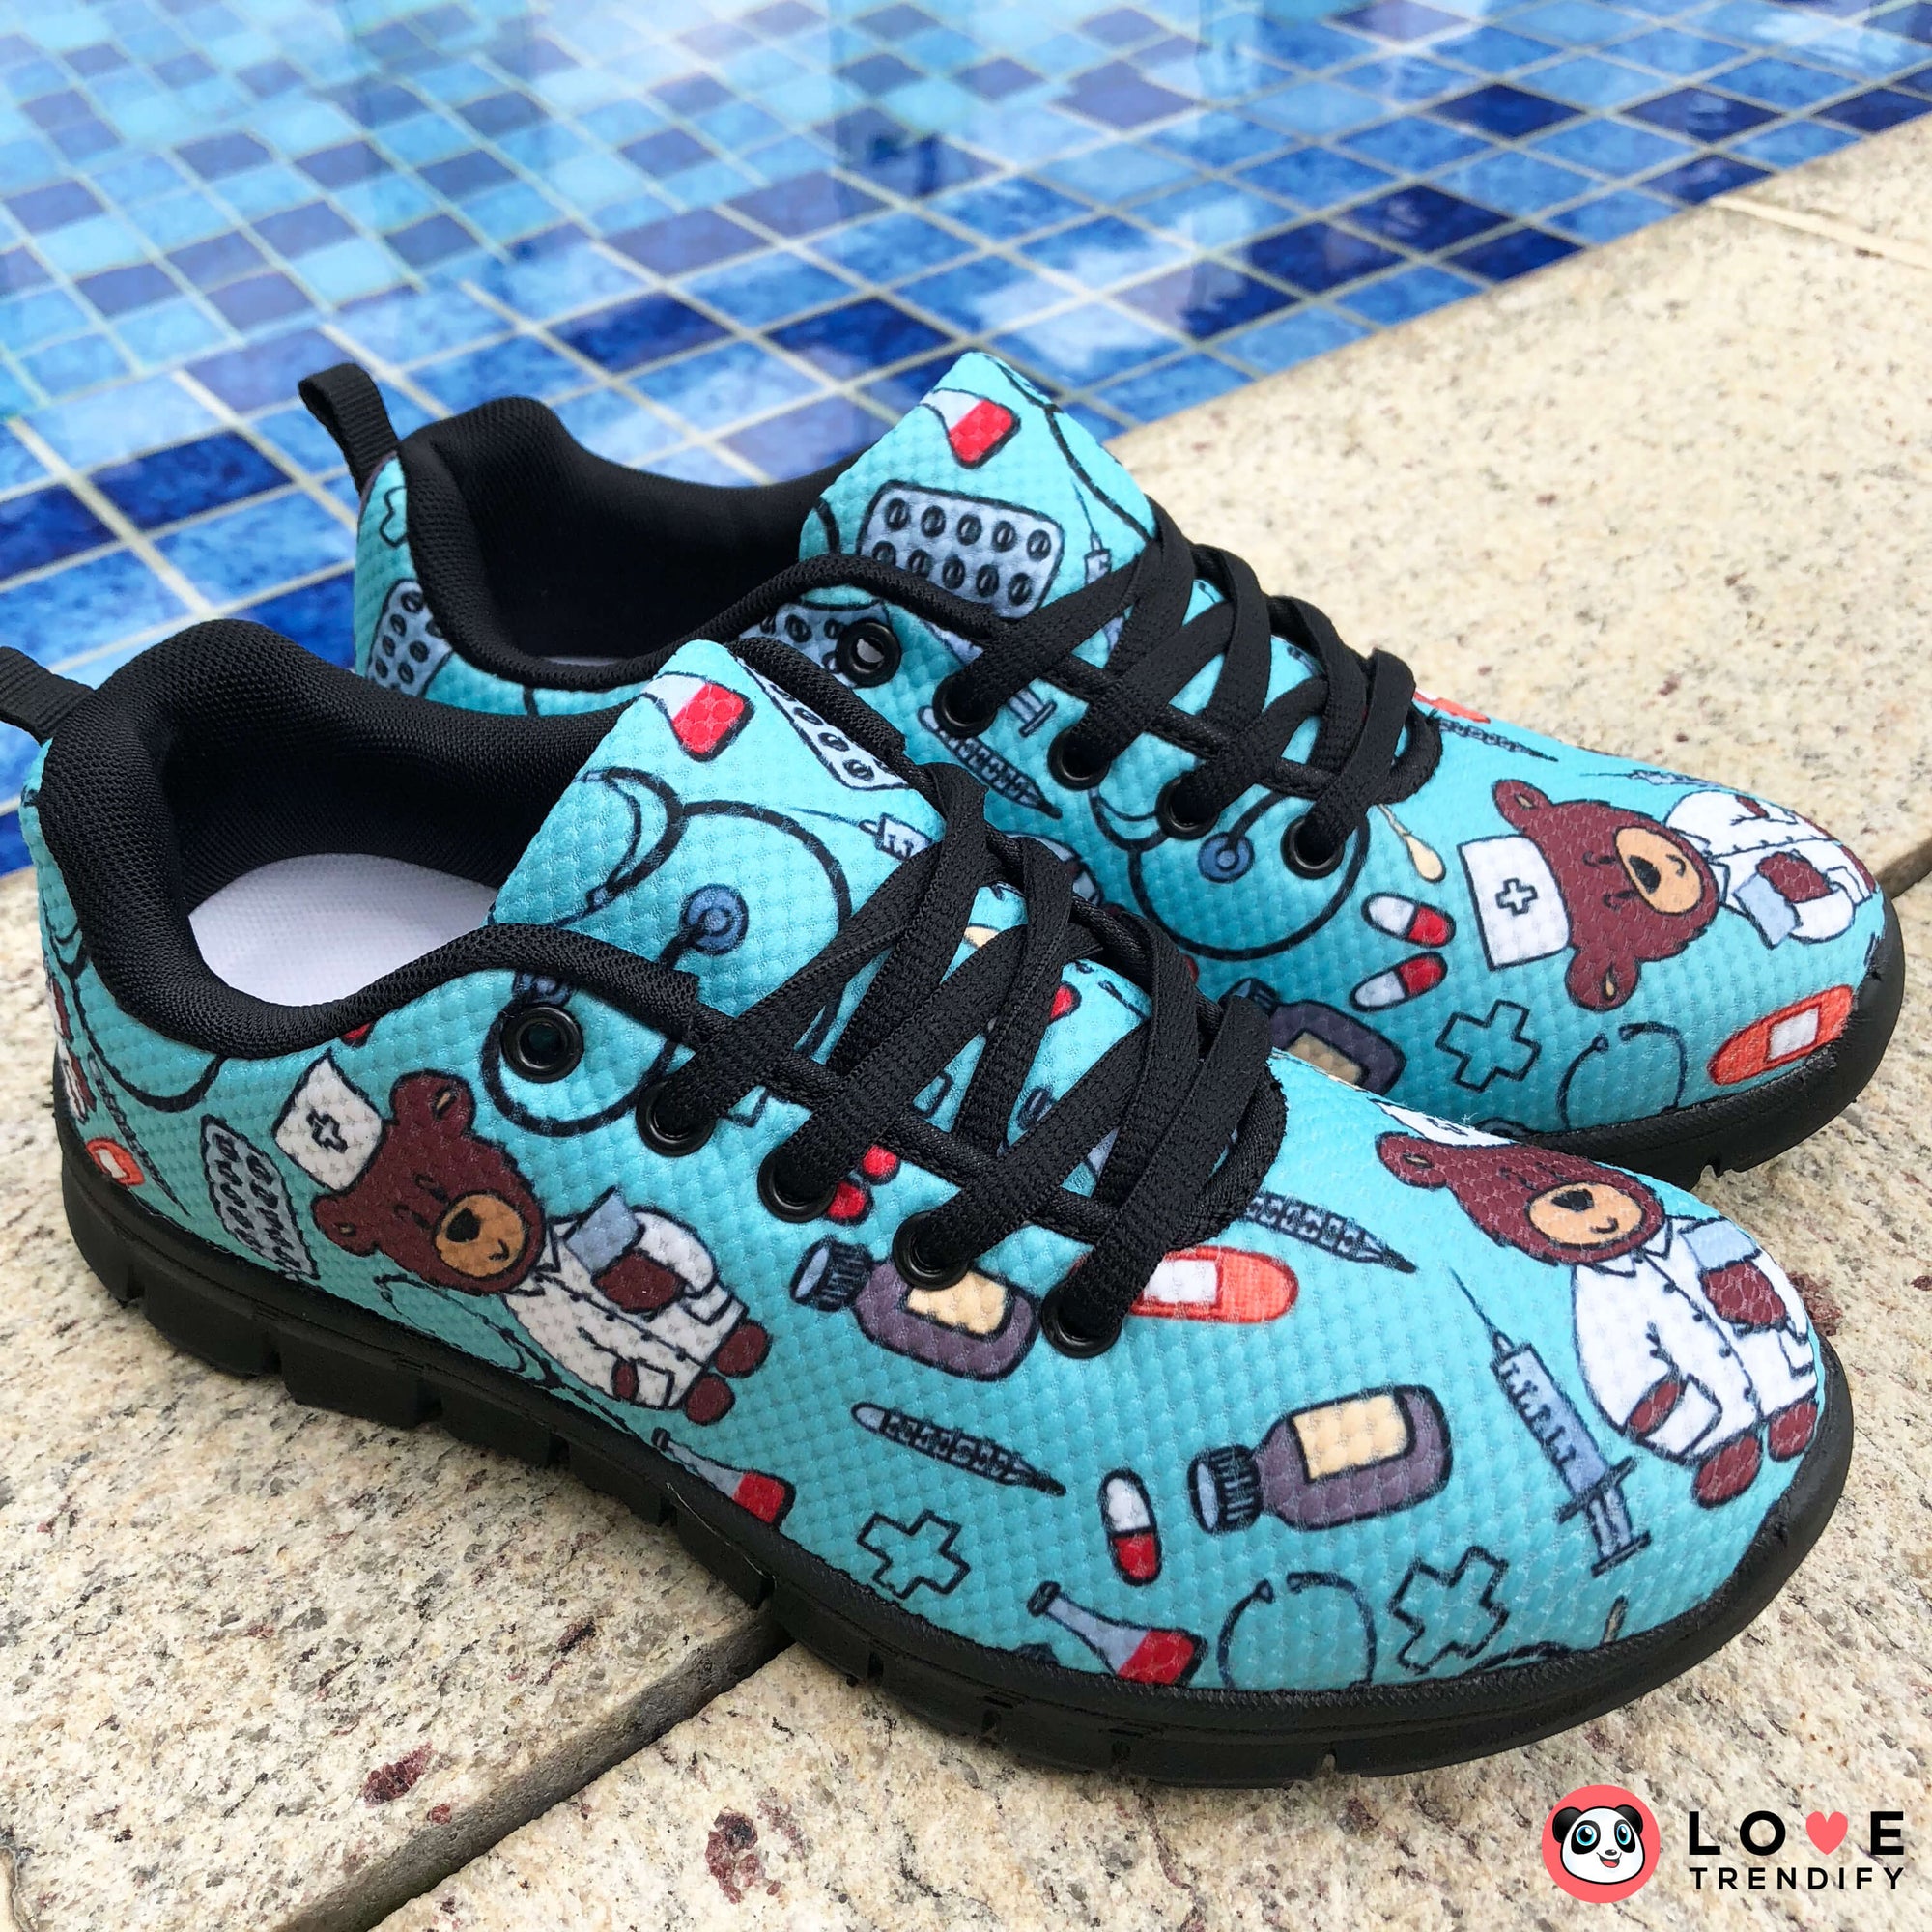 Nurse Sneakers (Nursing Tennis Shoes) for Women - Turquoise - lovetrendify